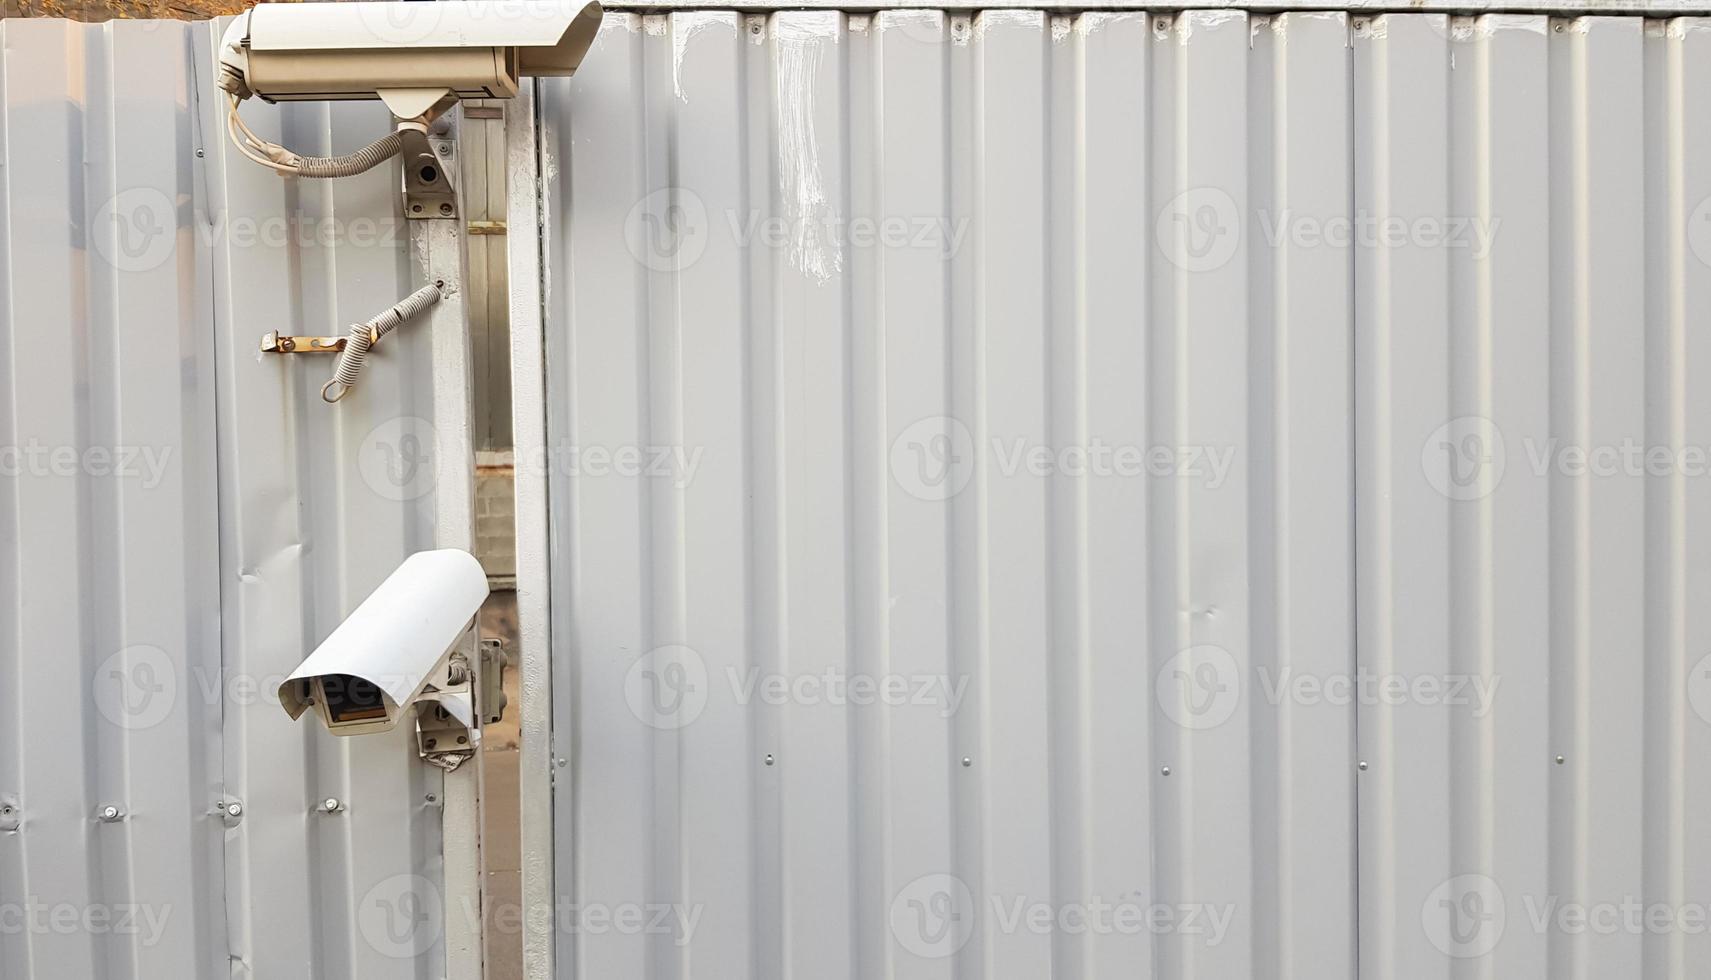 telecamera di sorveglianza in cima a una recinzione metallica ondulata grigia foto